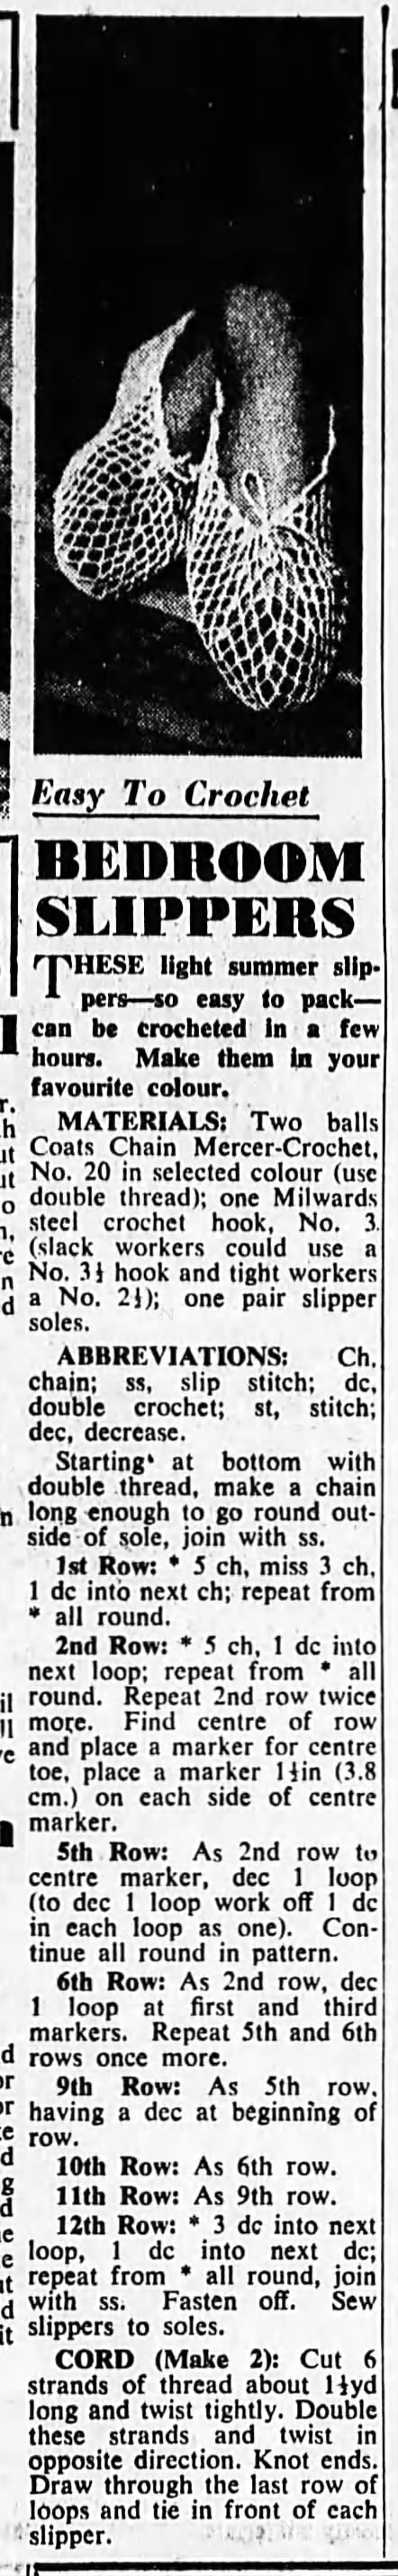 "Bedroom slippers" crochet pattern (1951)